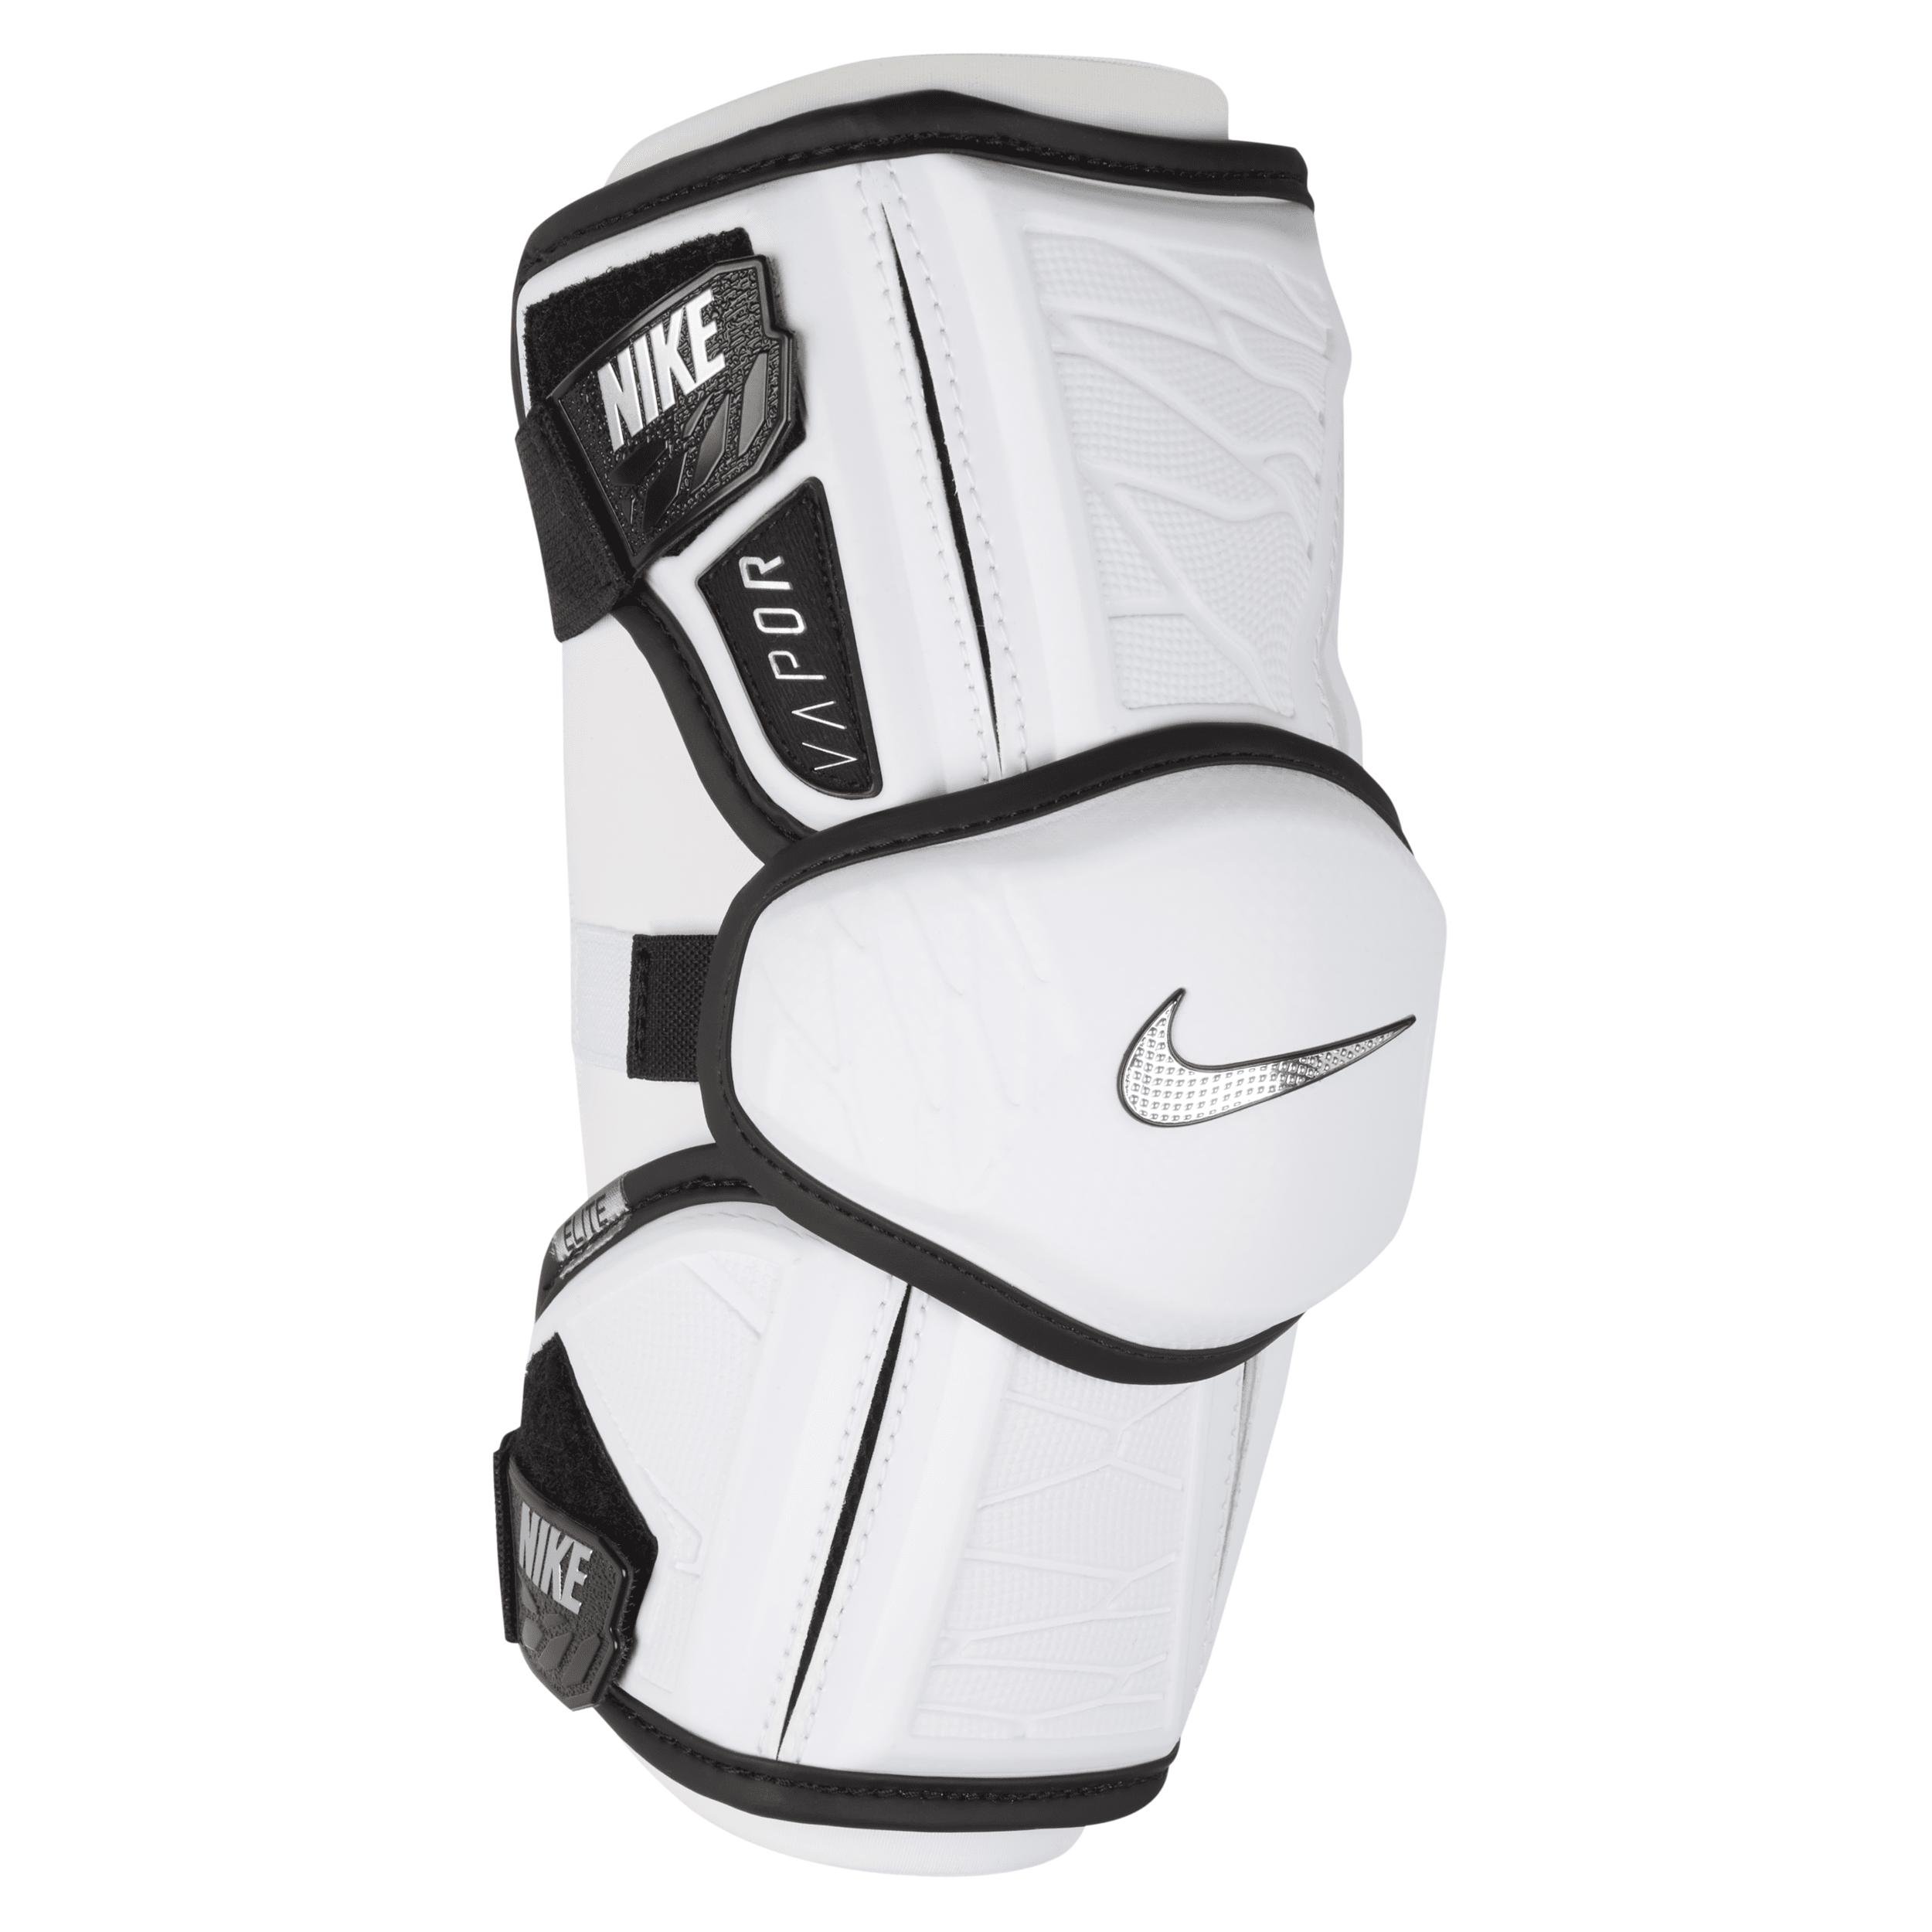 Nike Men's Vapor Elite Lacrosse Arm Pad by NIKE